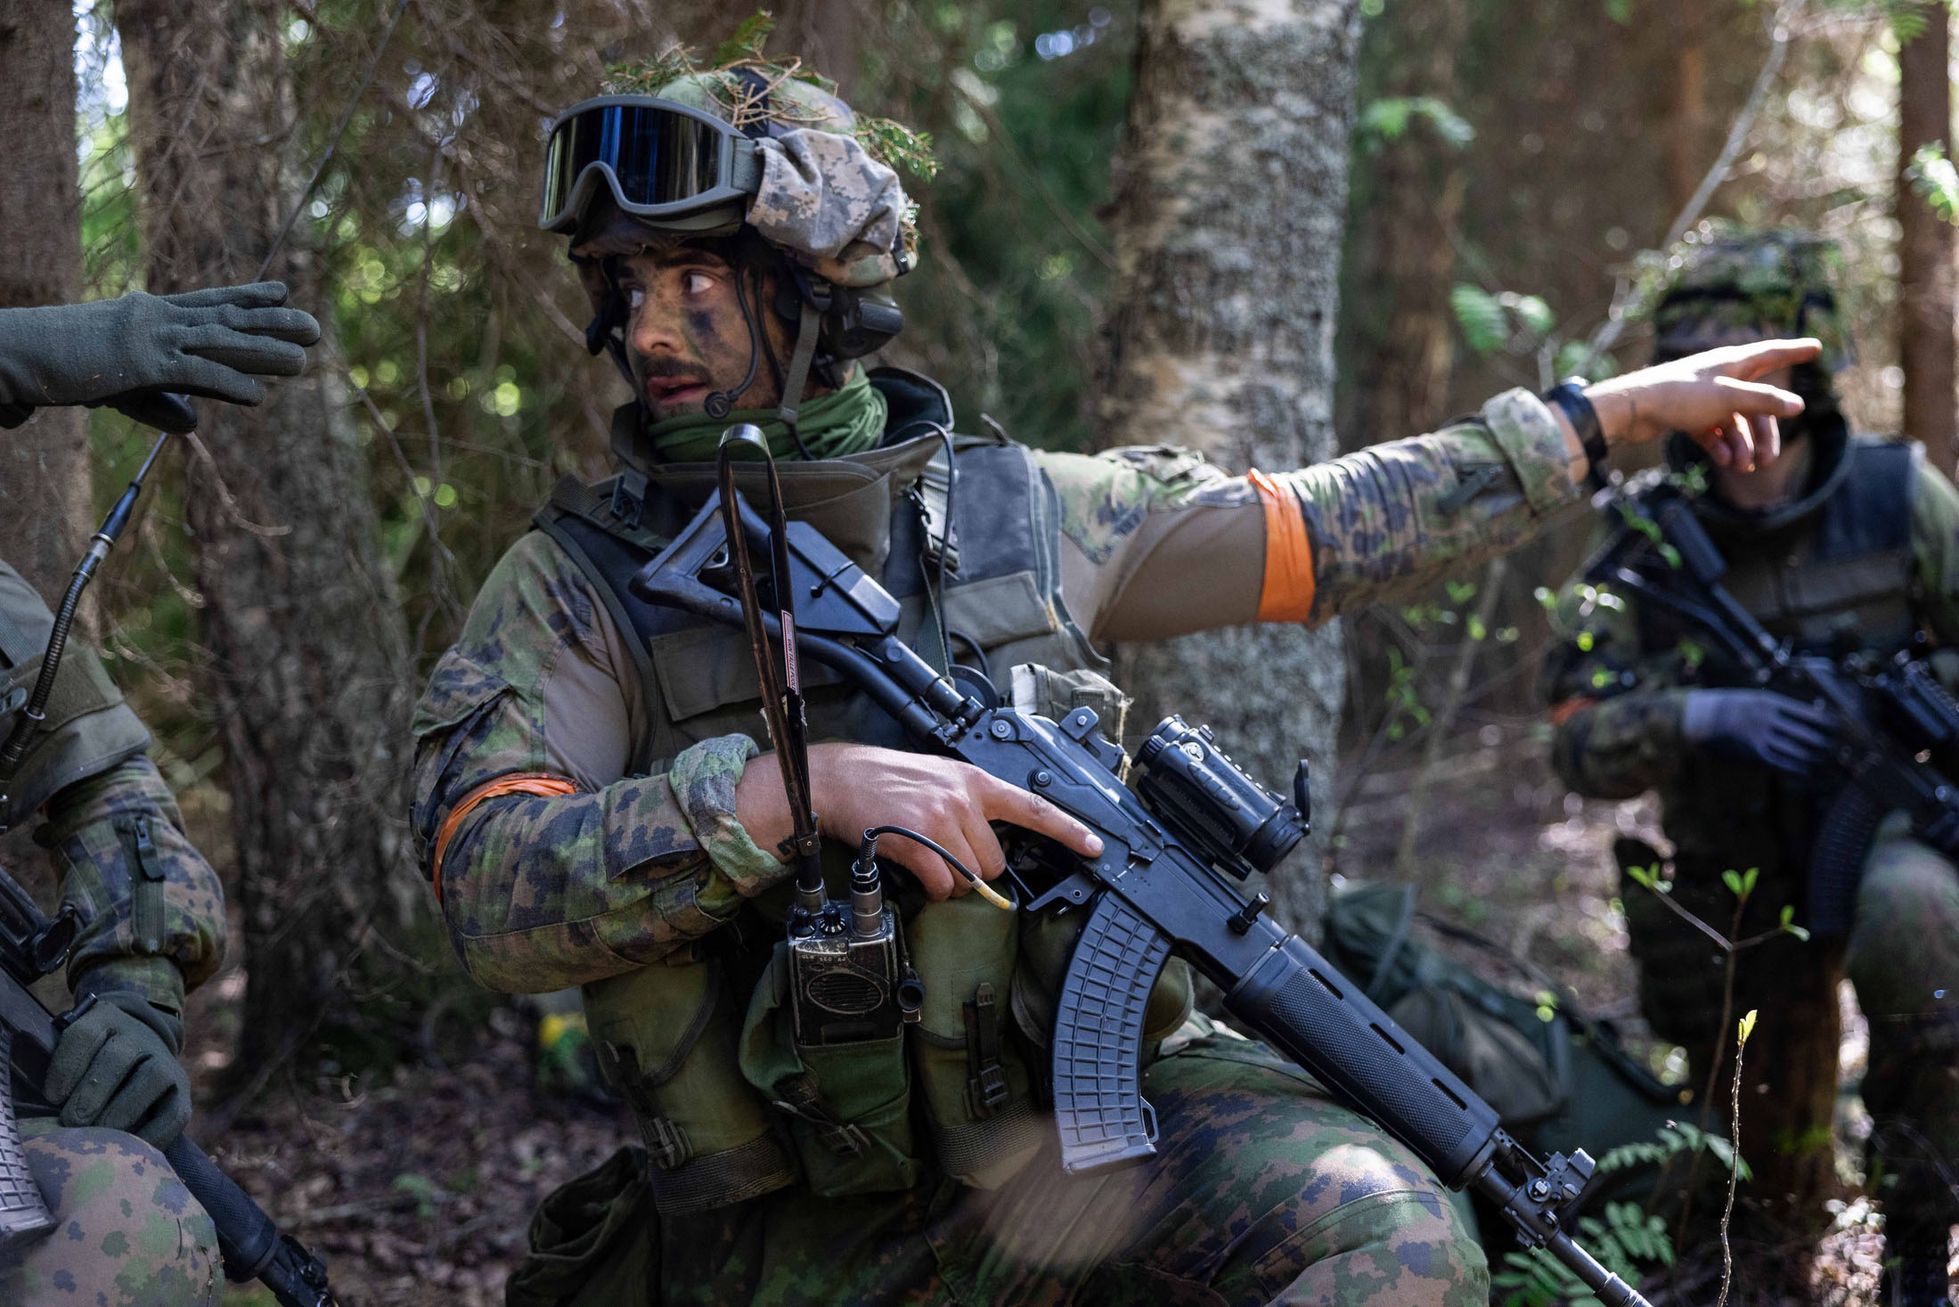 NATO finsko vojáci armáda cvičení zbraně